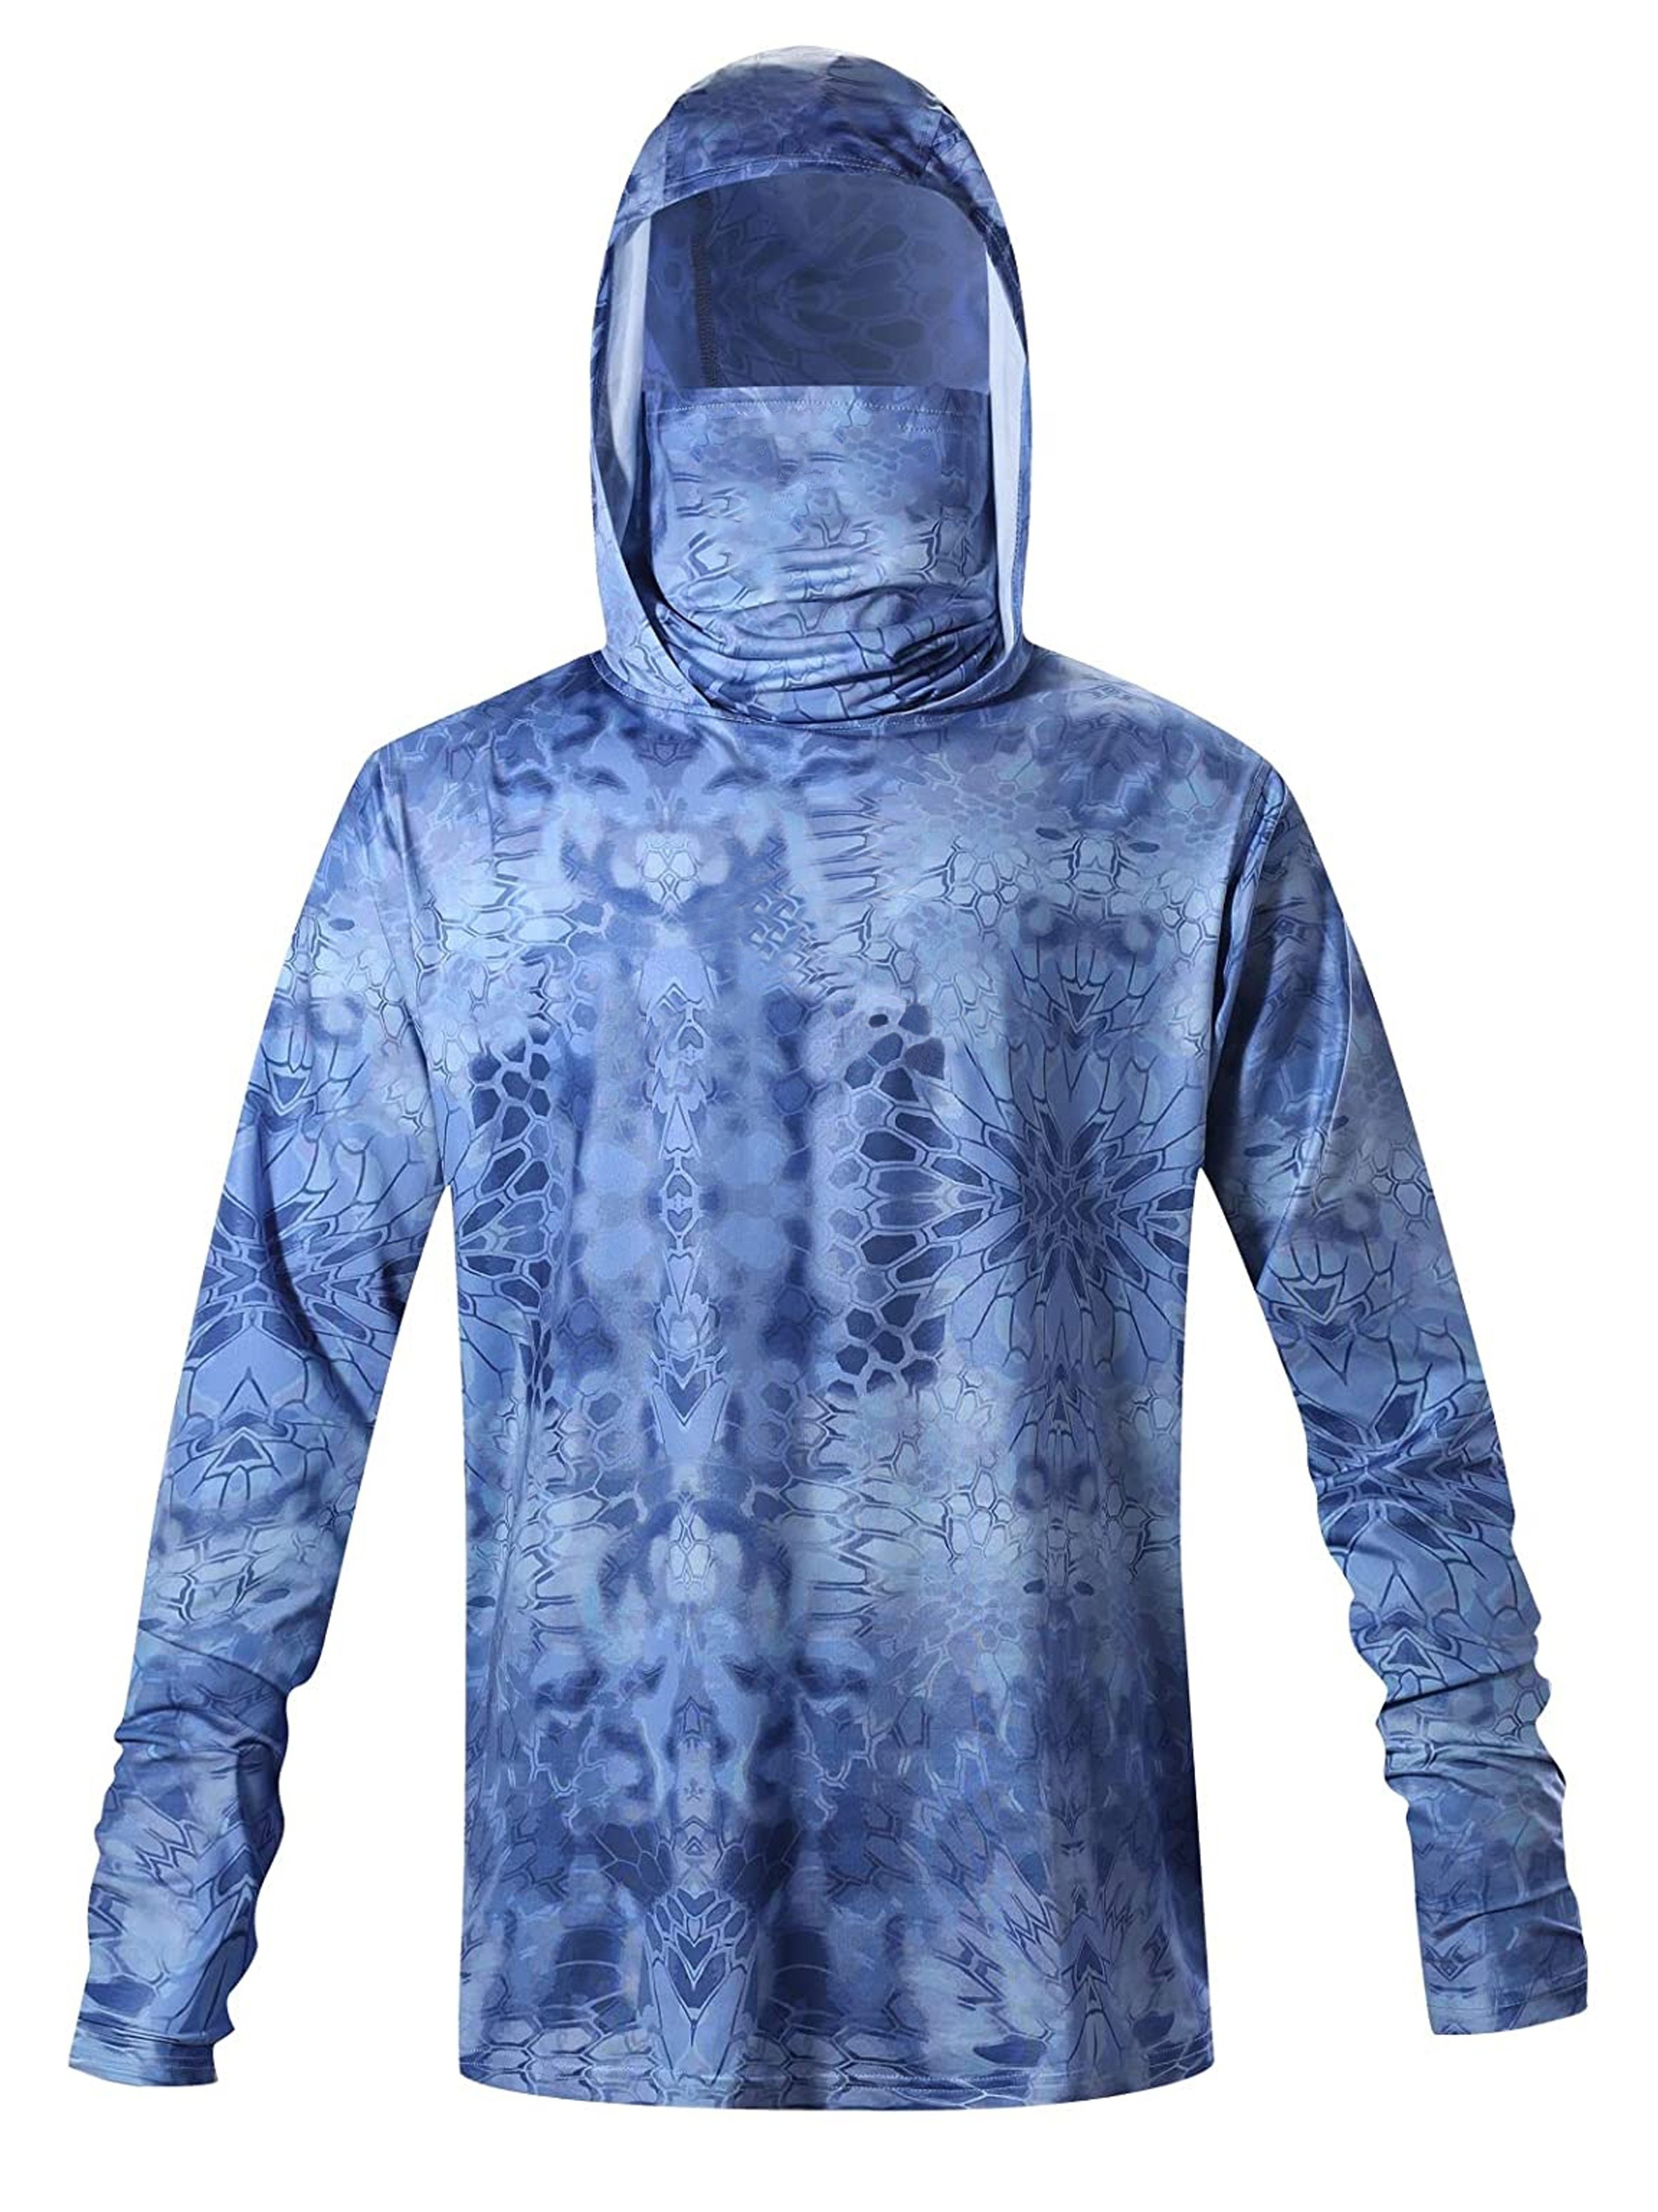 Sun Protection Jacket Coat Outwear Tops Anti UV UPF 50+ Men Hooded